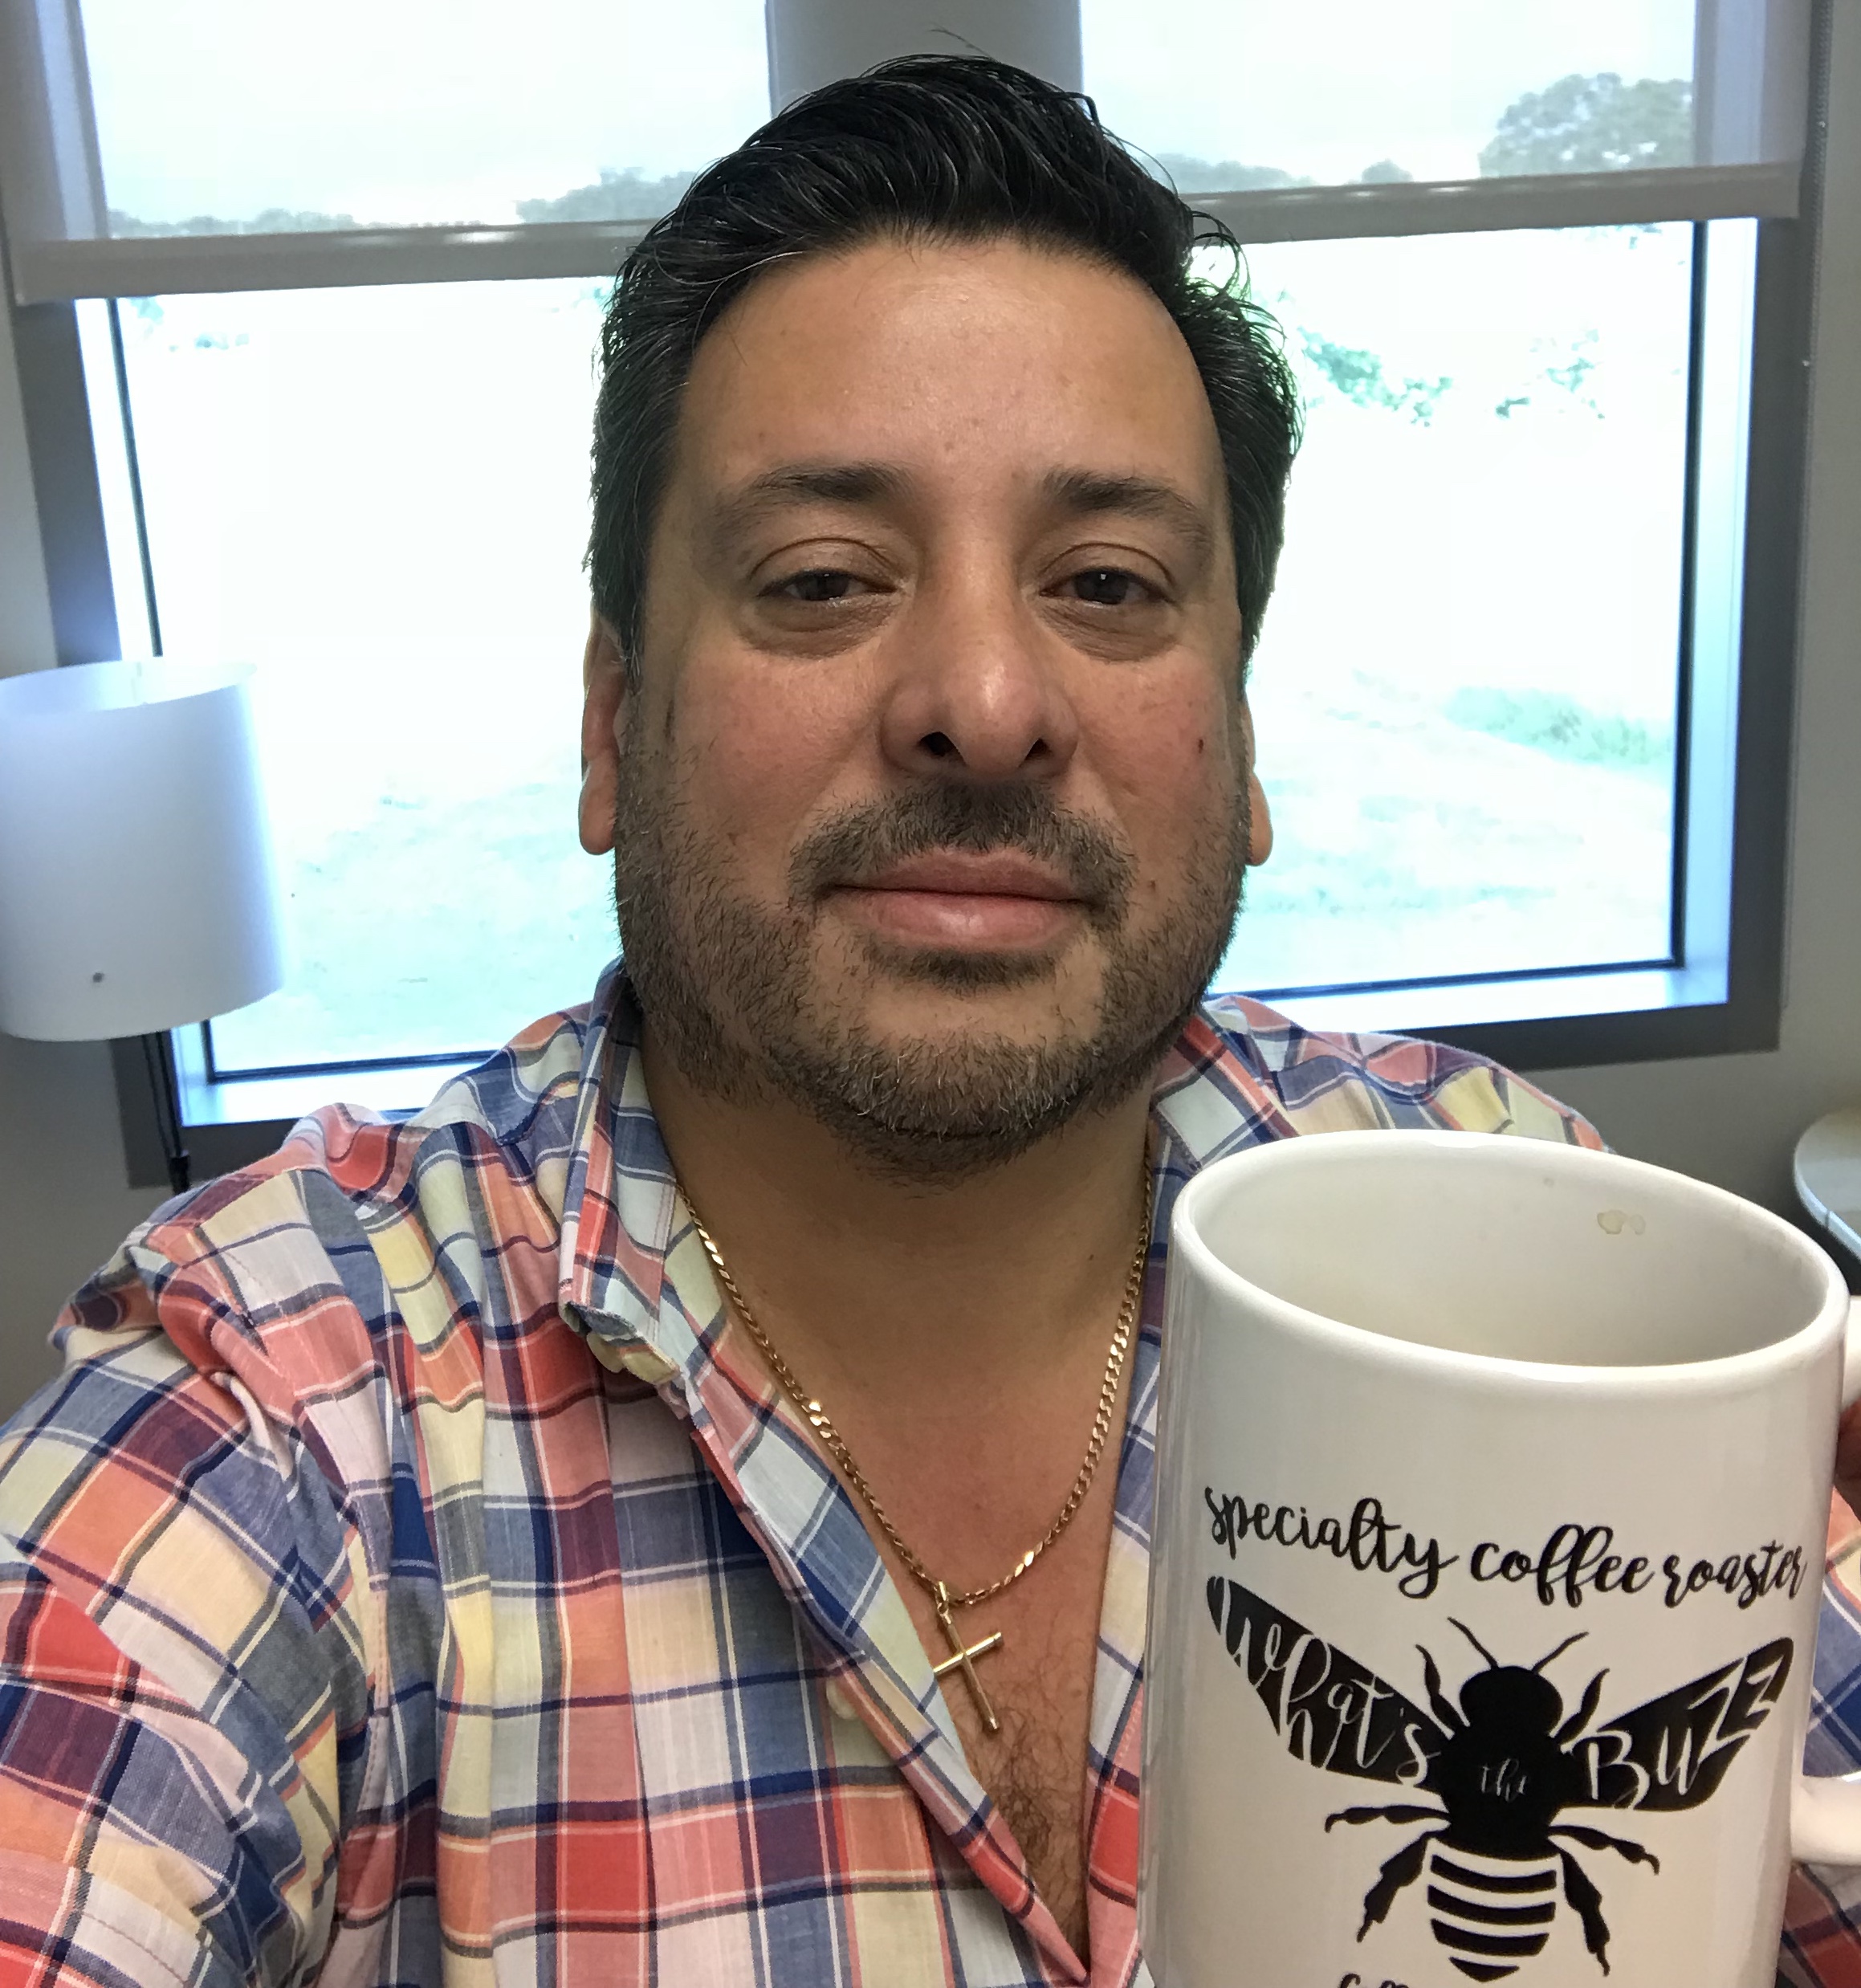 Rodrigo holding coffee cup